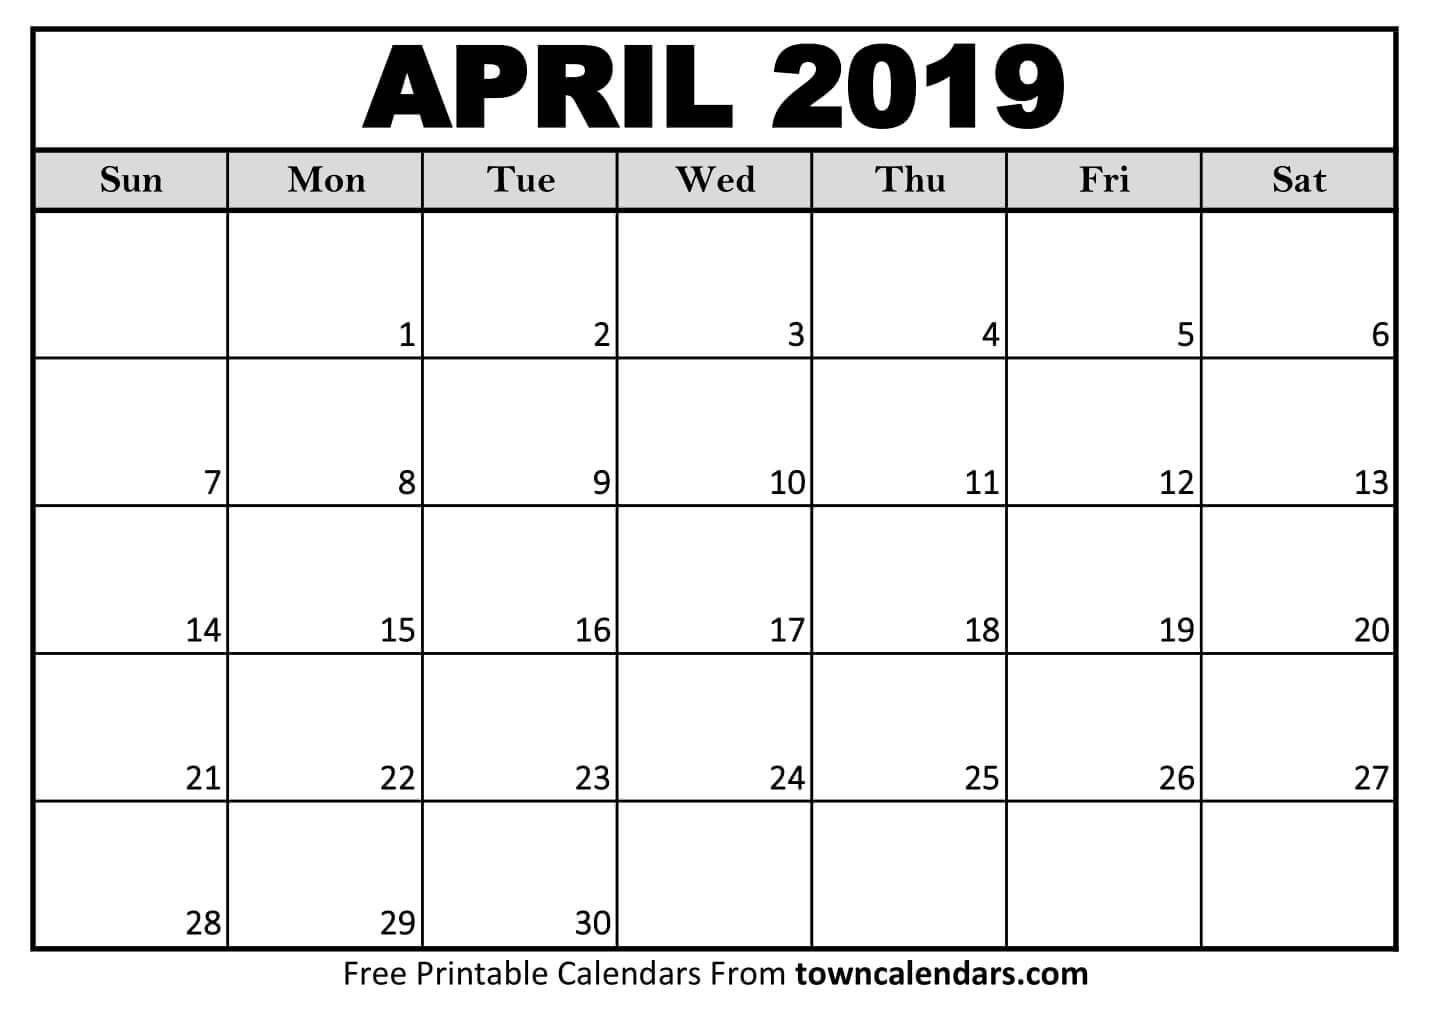 Printable April 2019 Calendar towncalendars